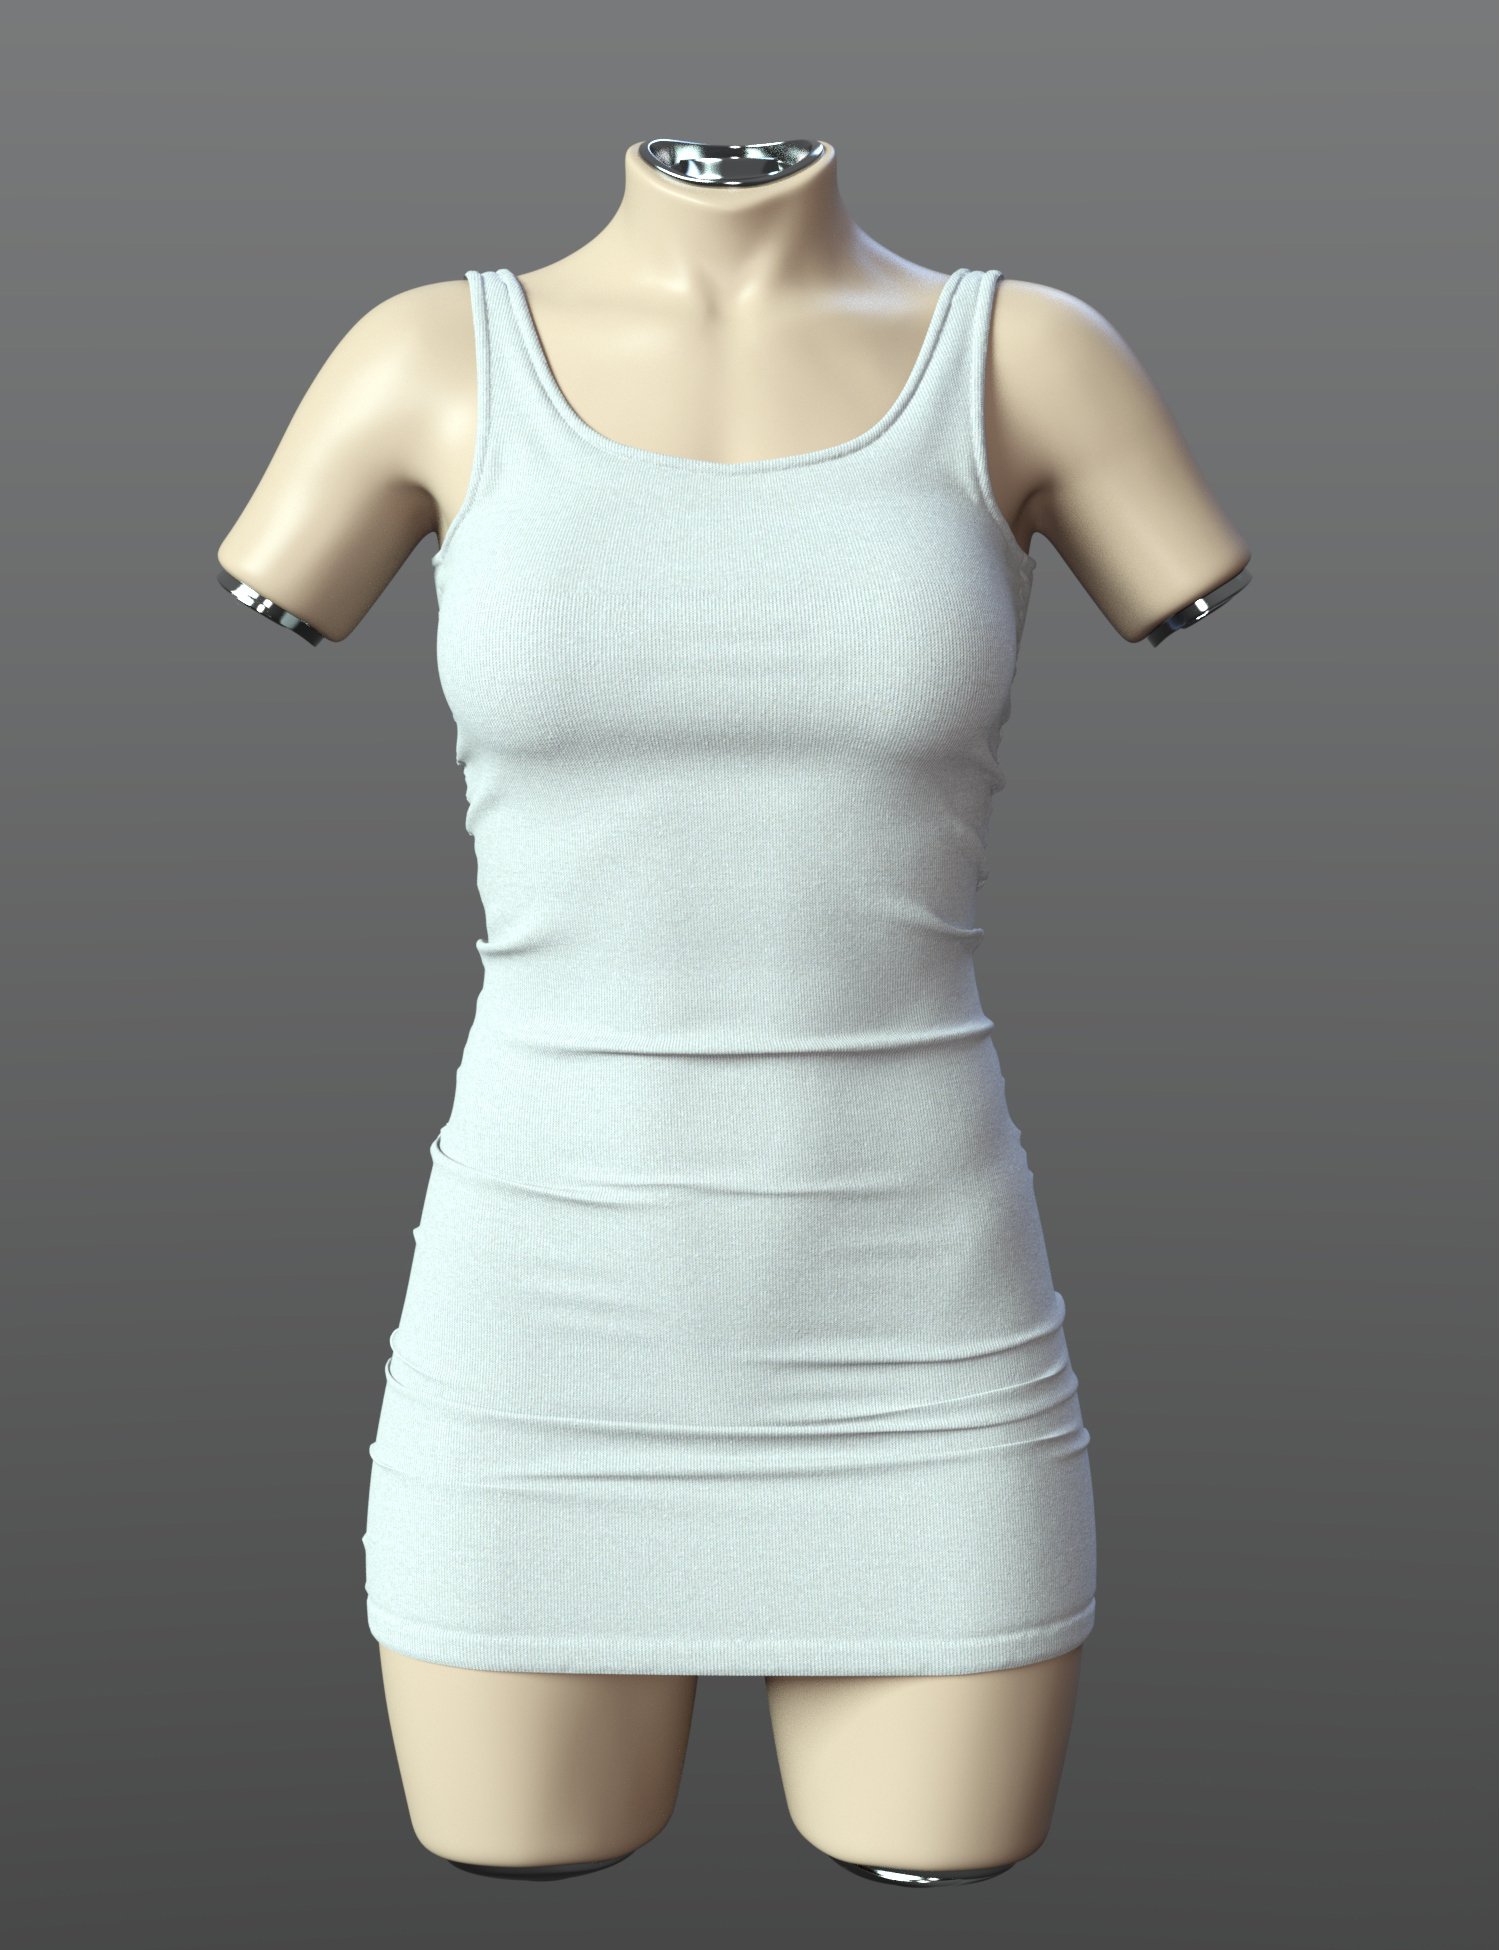 SPR One Piece Dress for Genesis 9 by: Sprite, 3D Models by Daz 3D